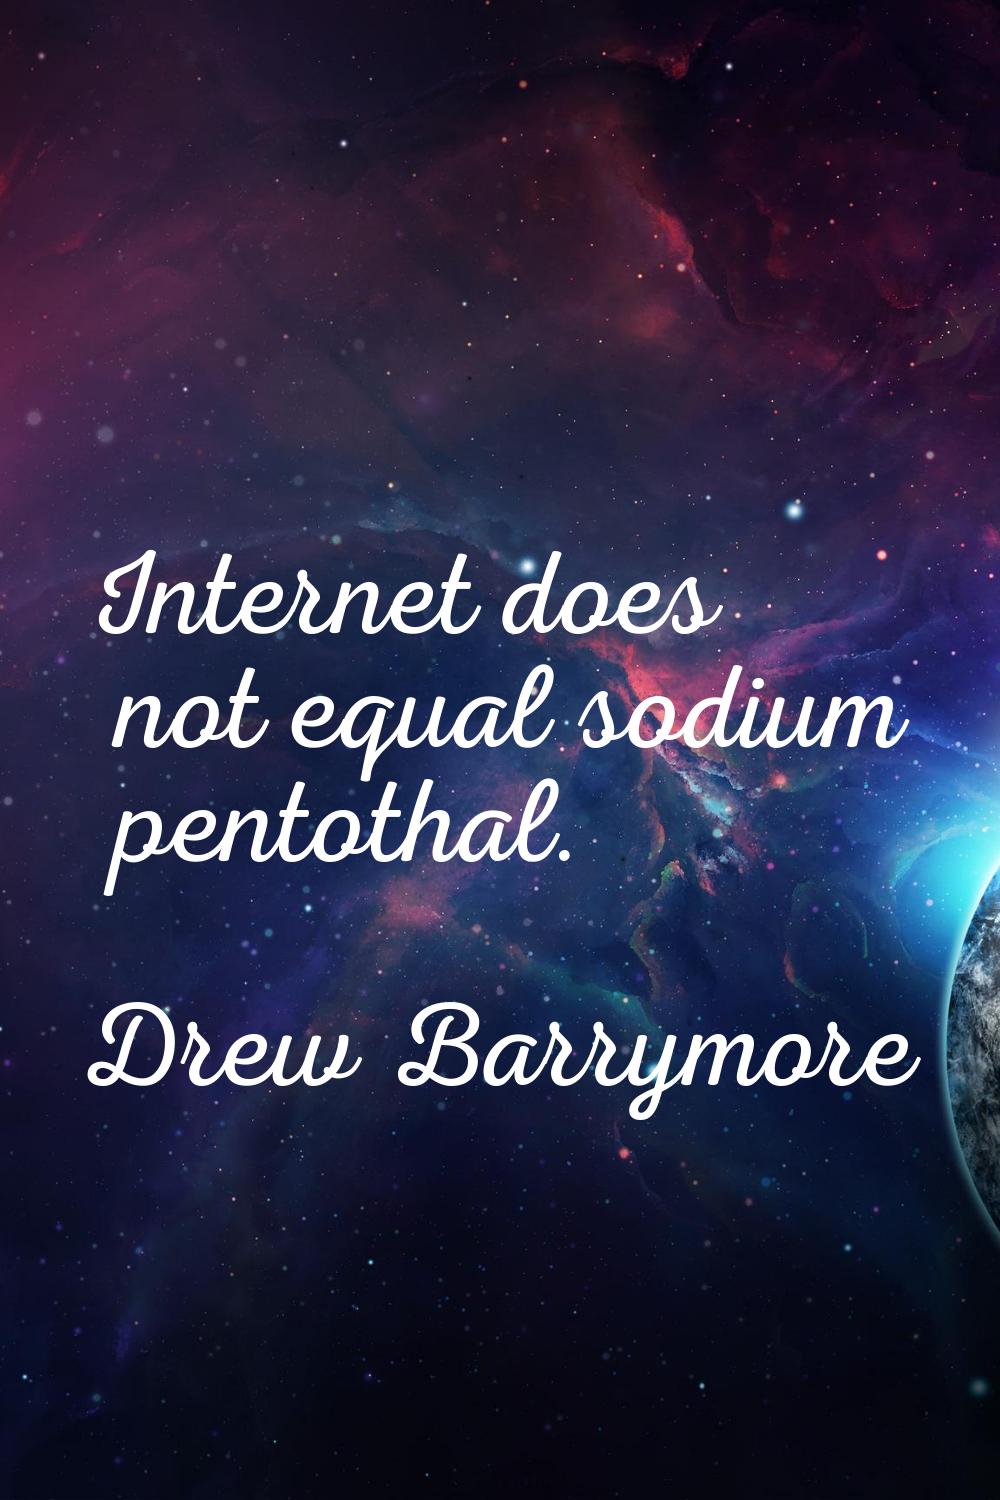 Internet does not equal sodium pentothal.